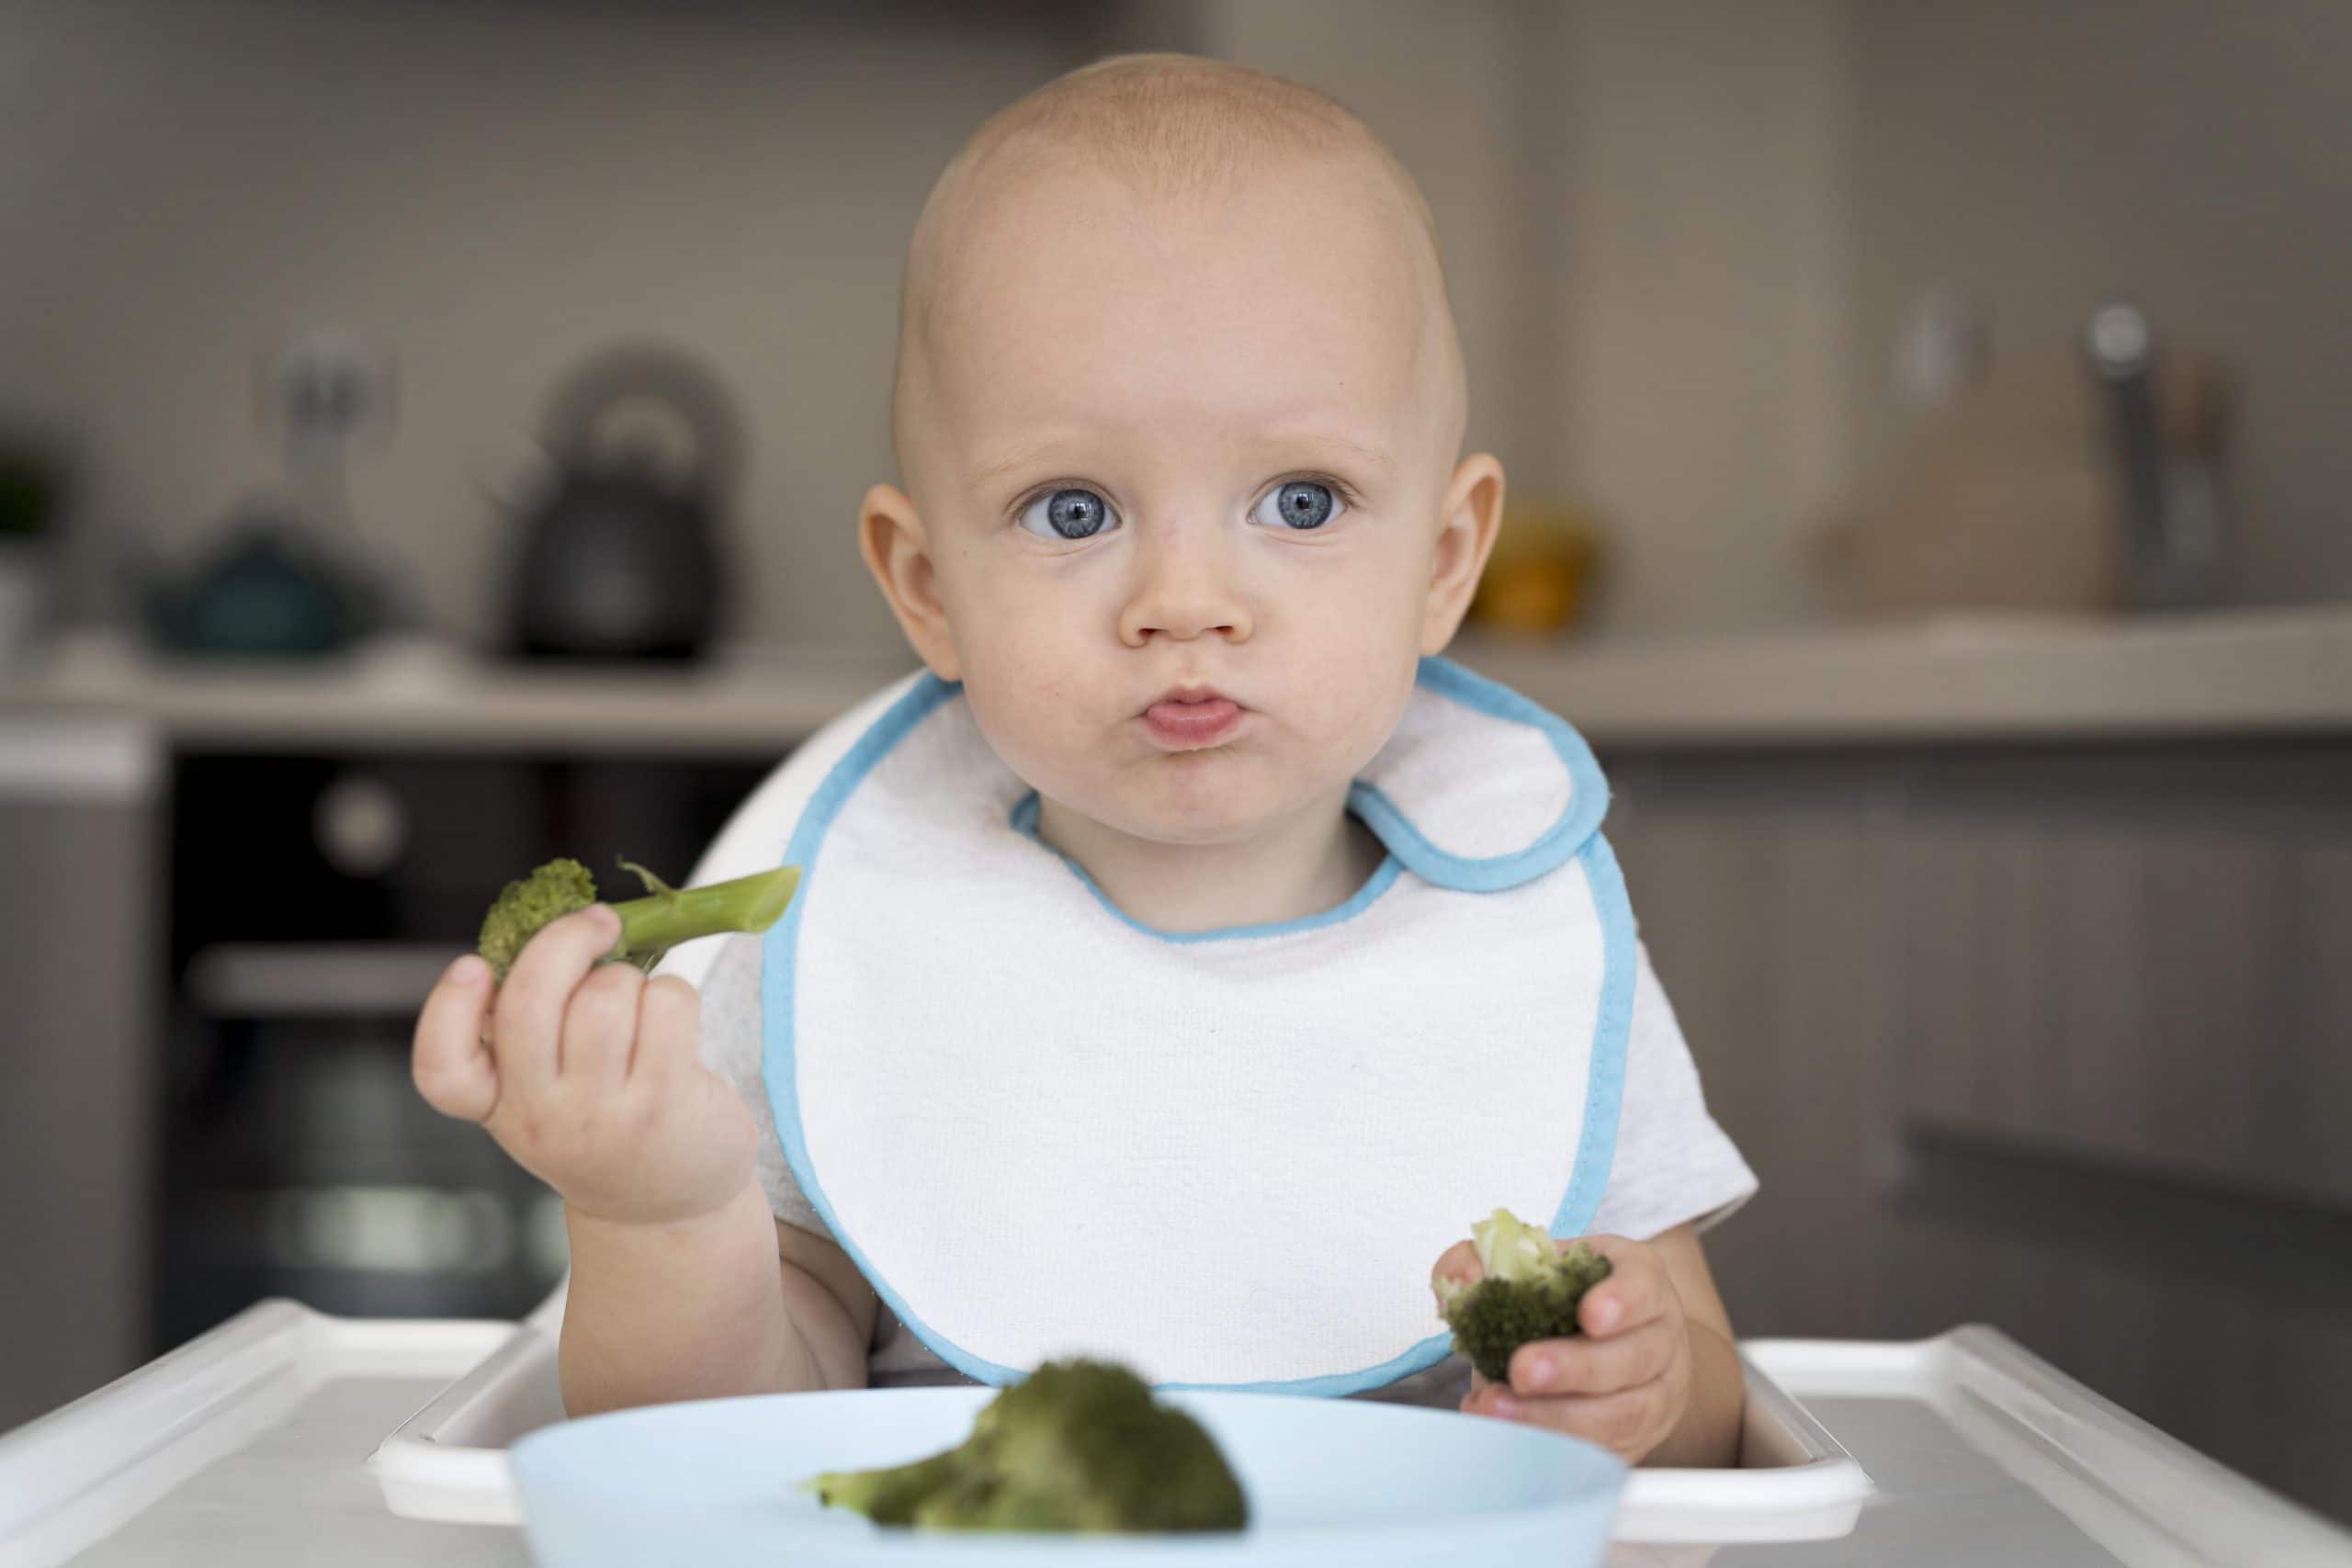 Baby Led Weaning: BLW ฝึกลูกหยิบอาหารกินเองโดยไม่ต้องป้อน